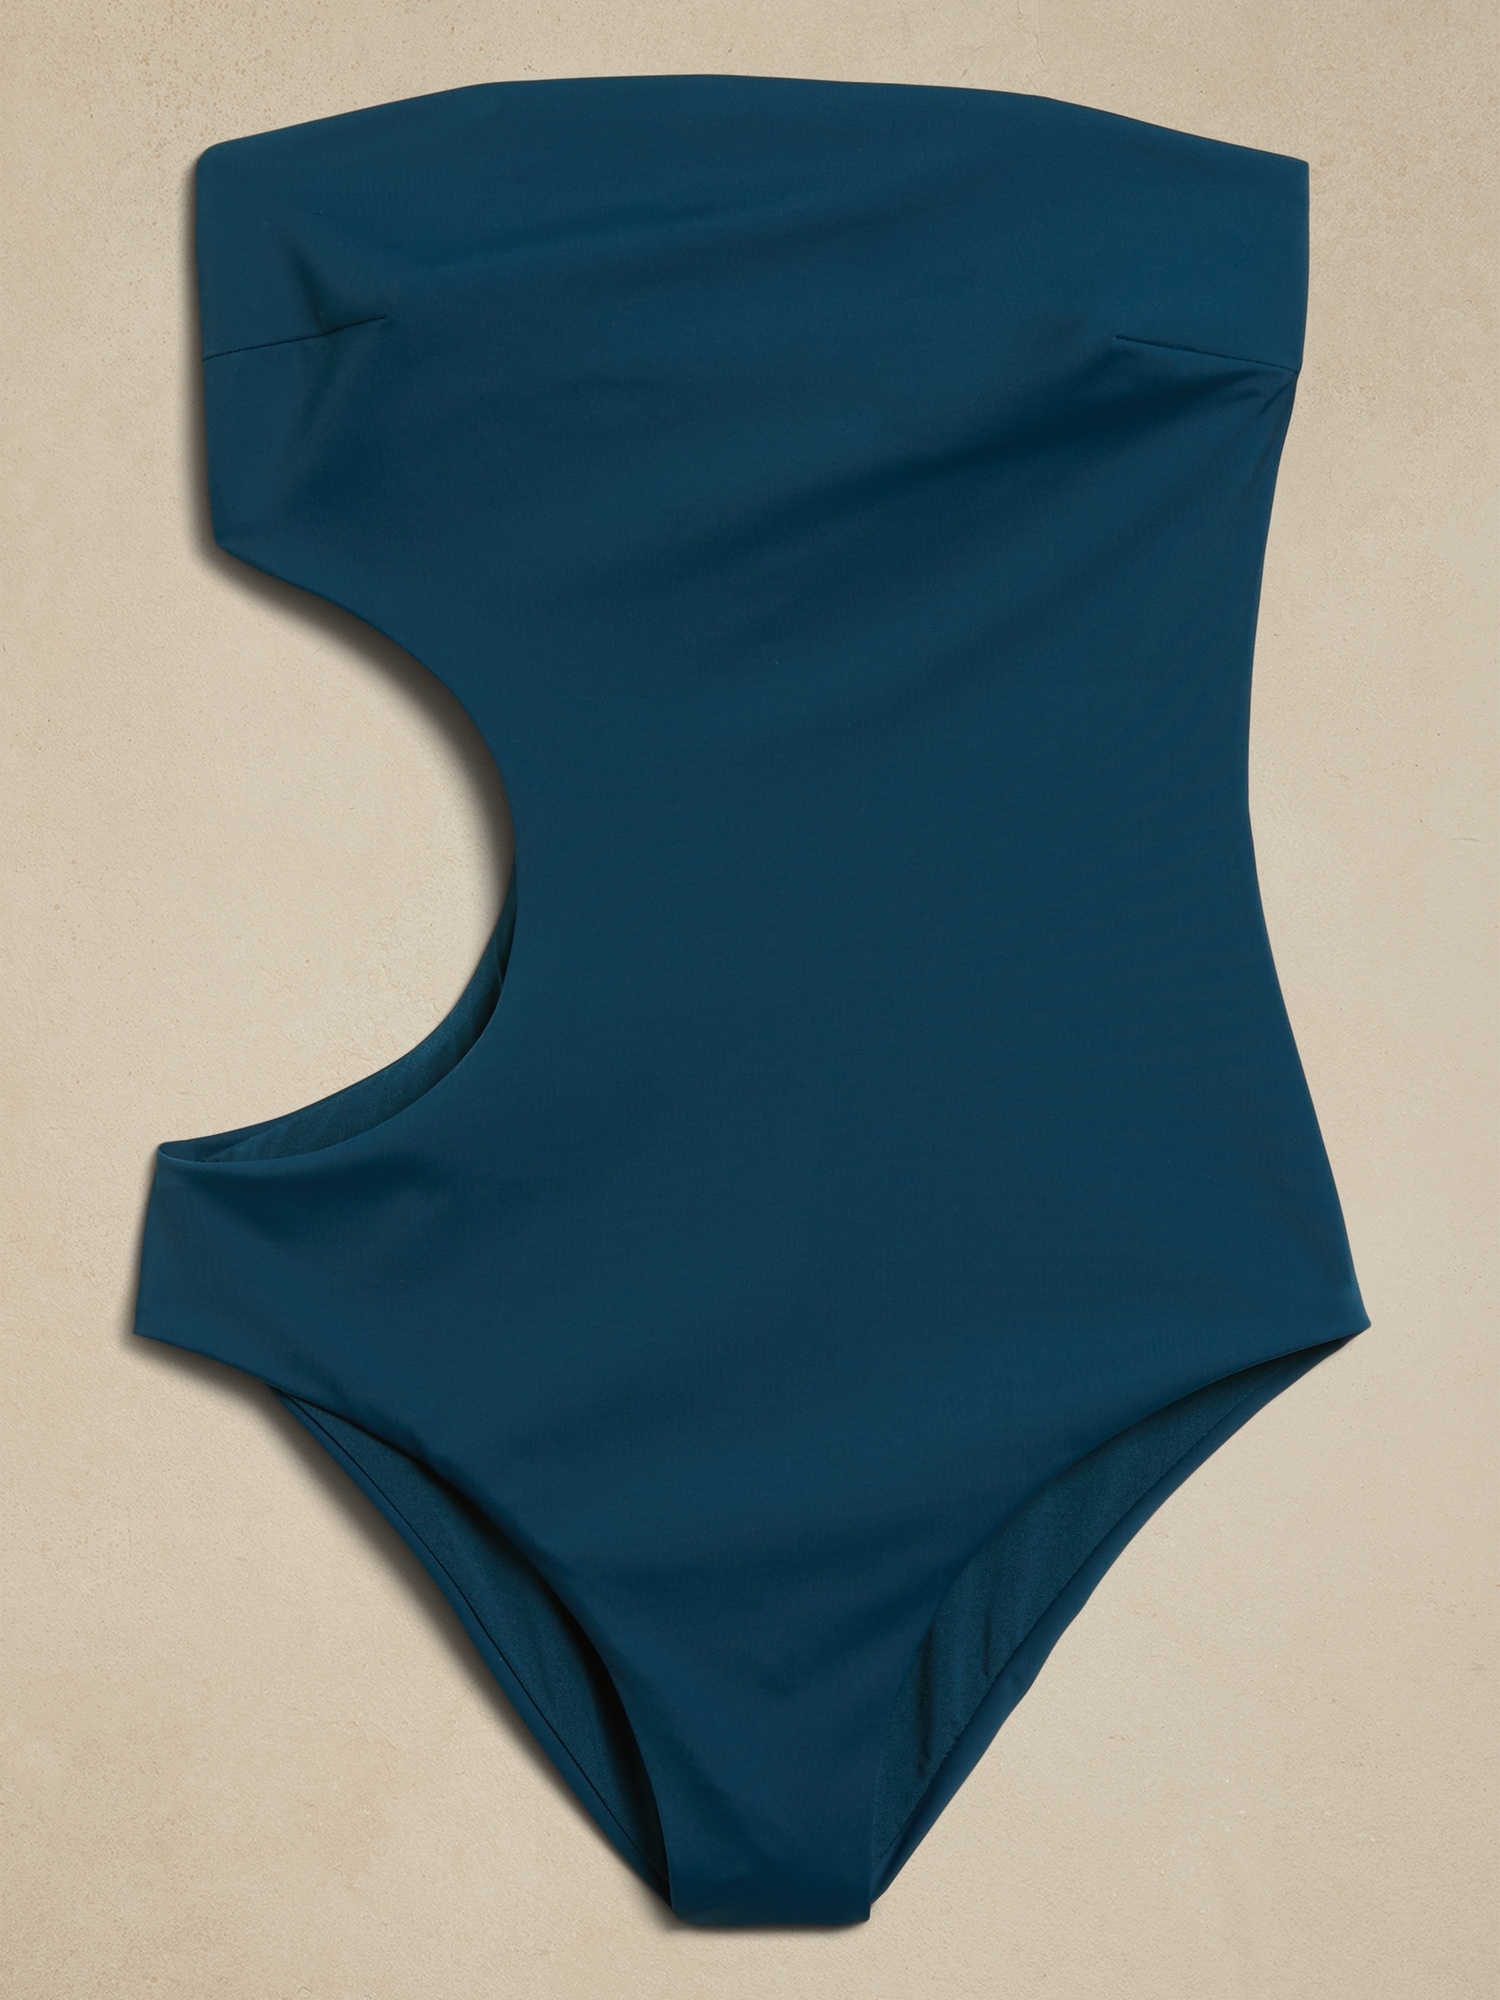 Banana Republic Lele Cut-Out One-Piece Swimsuit &#124 Onia blue. 1